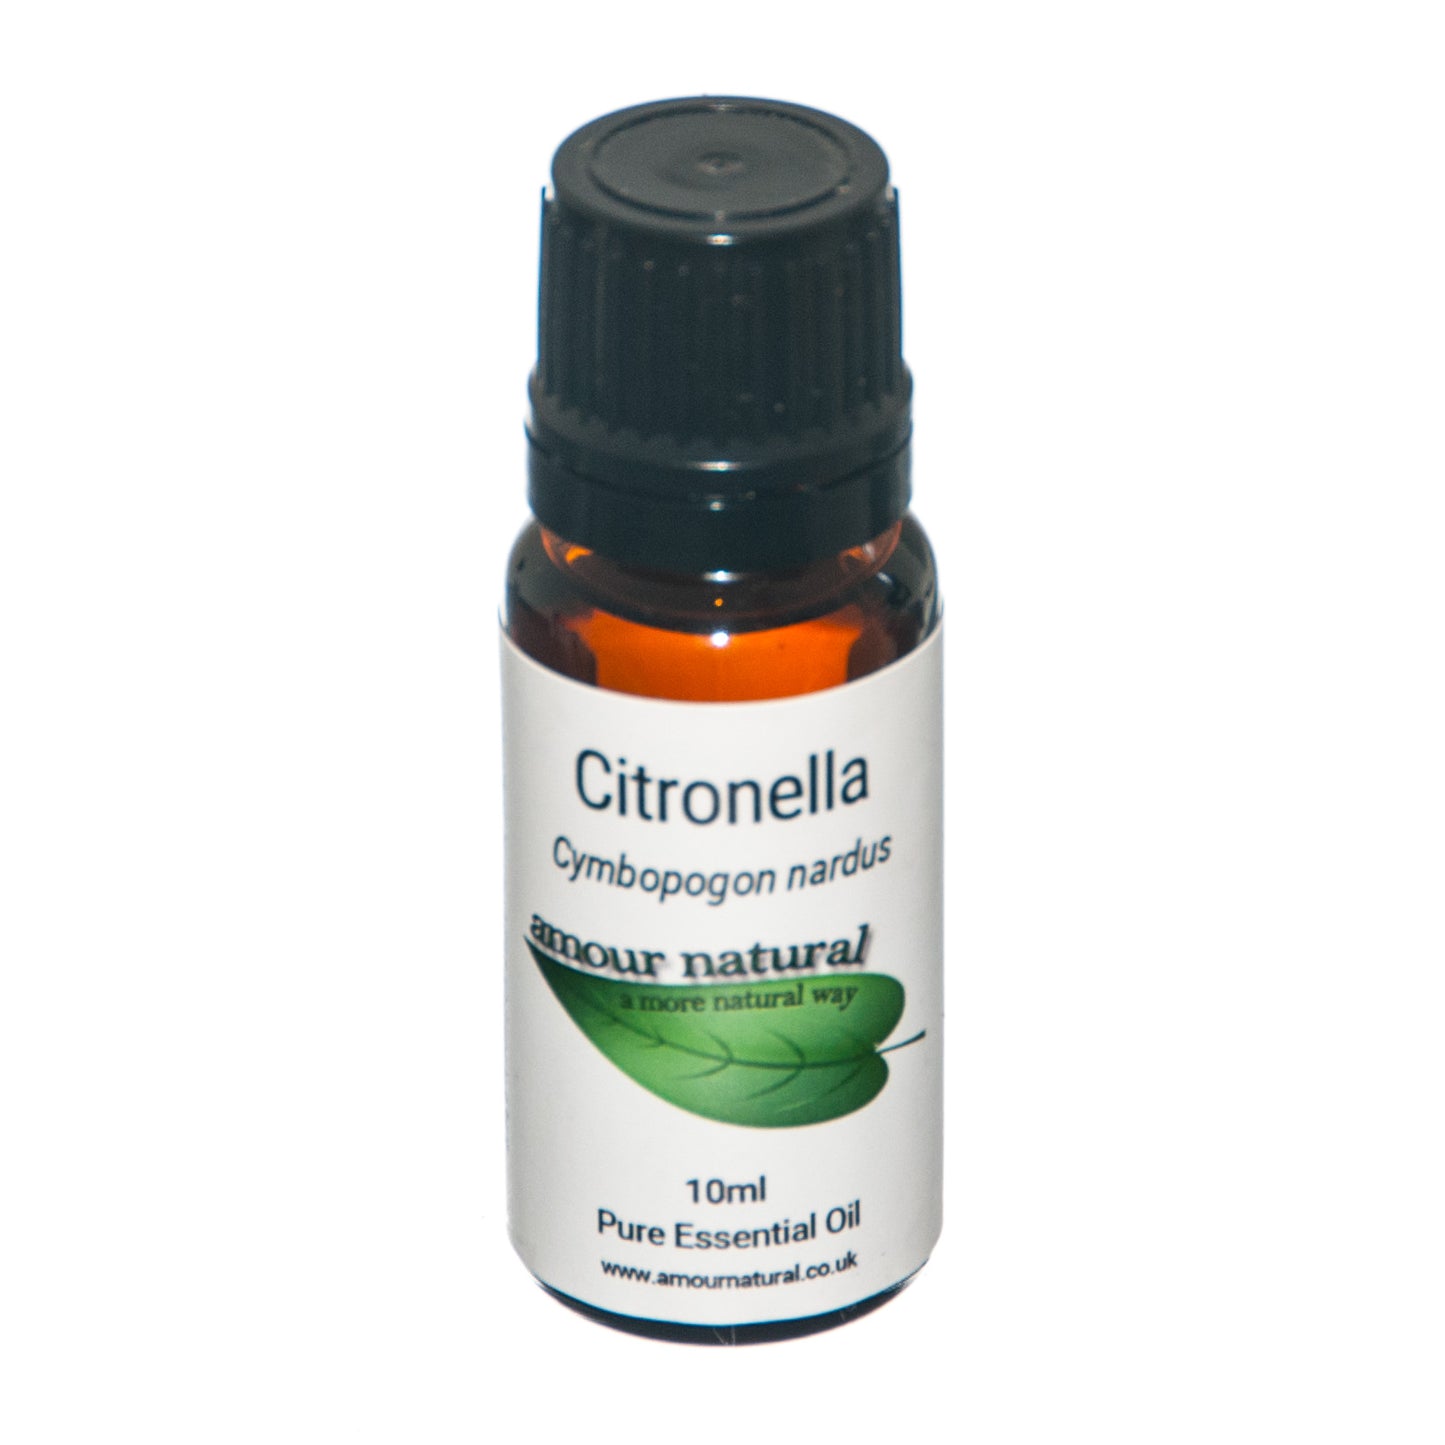 Citronella - Essential Oil